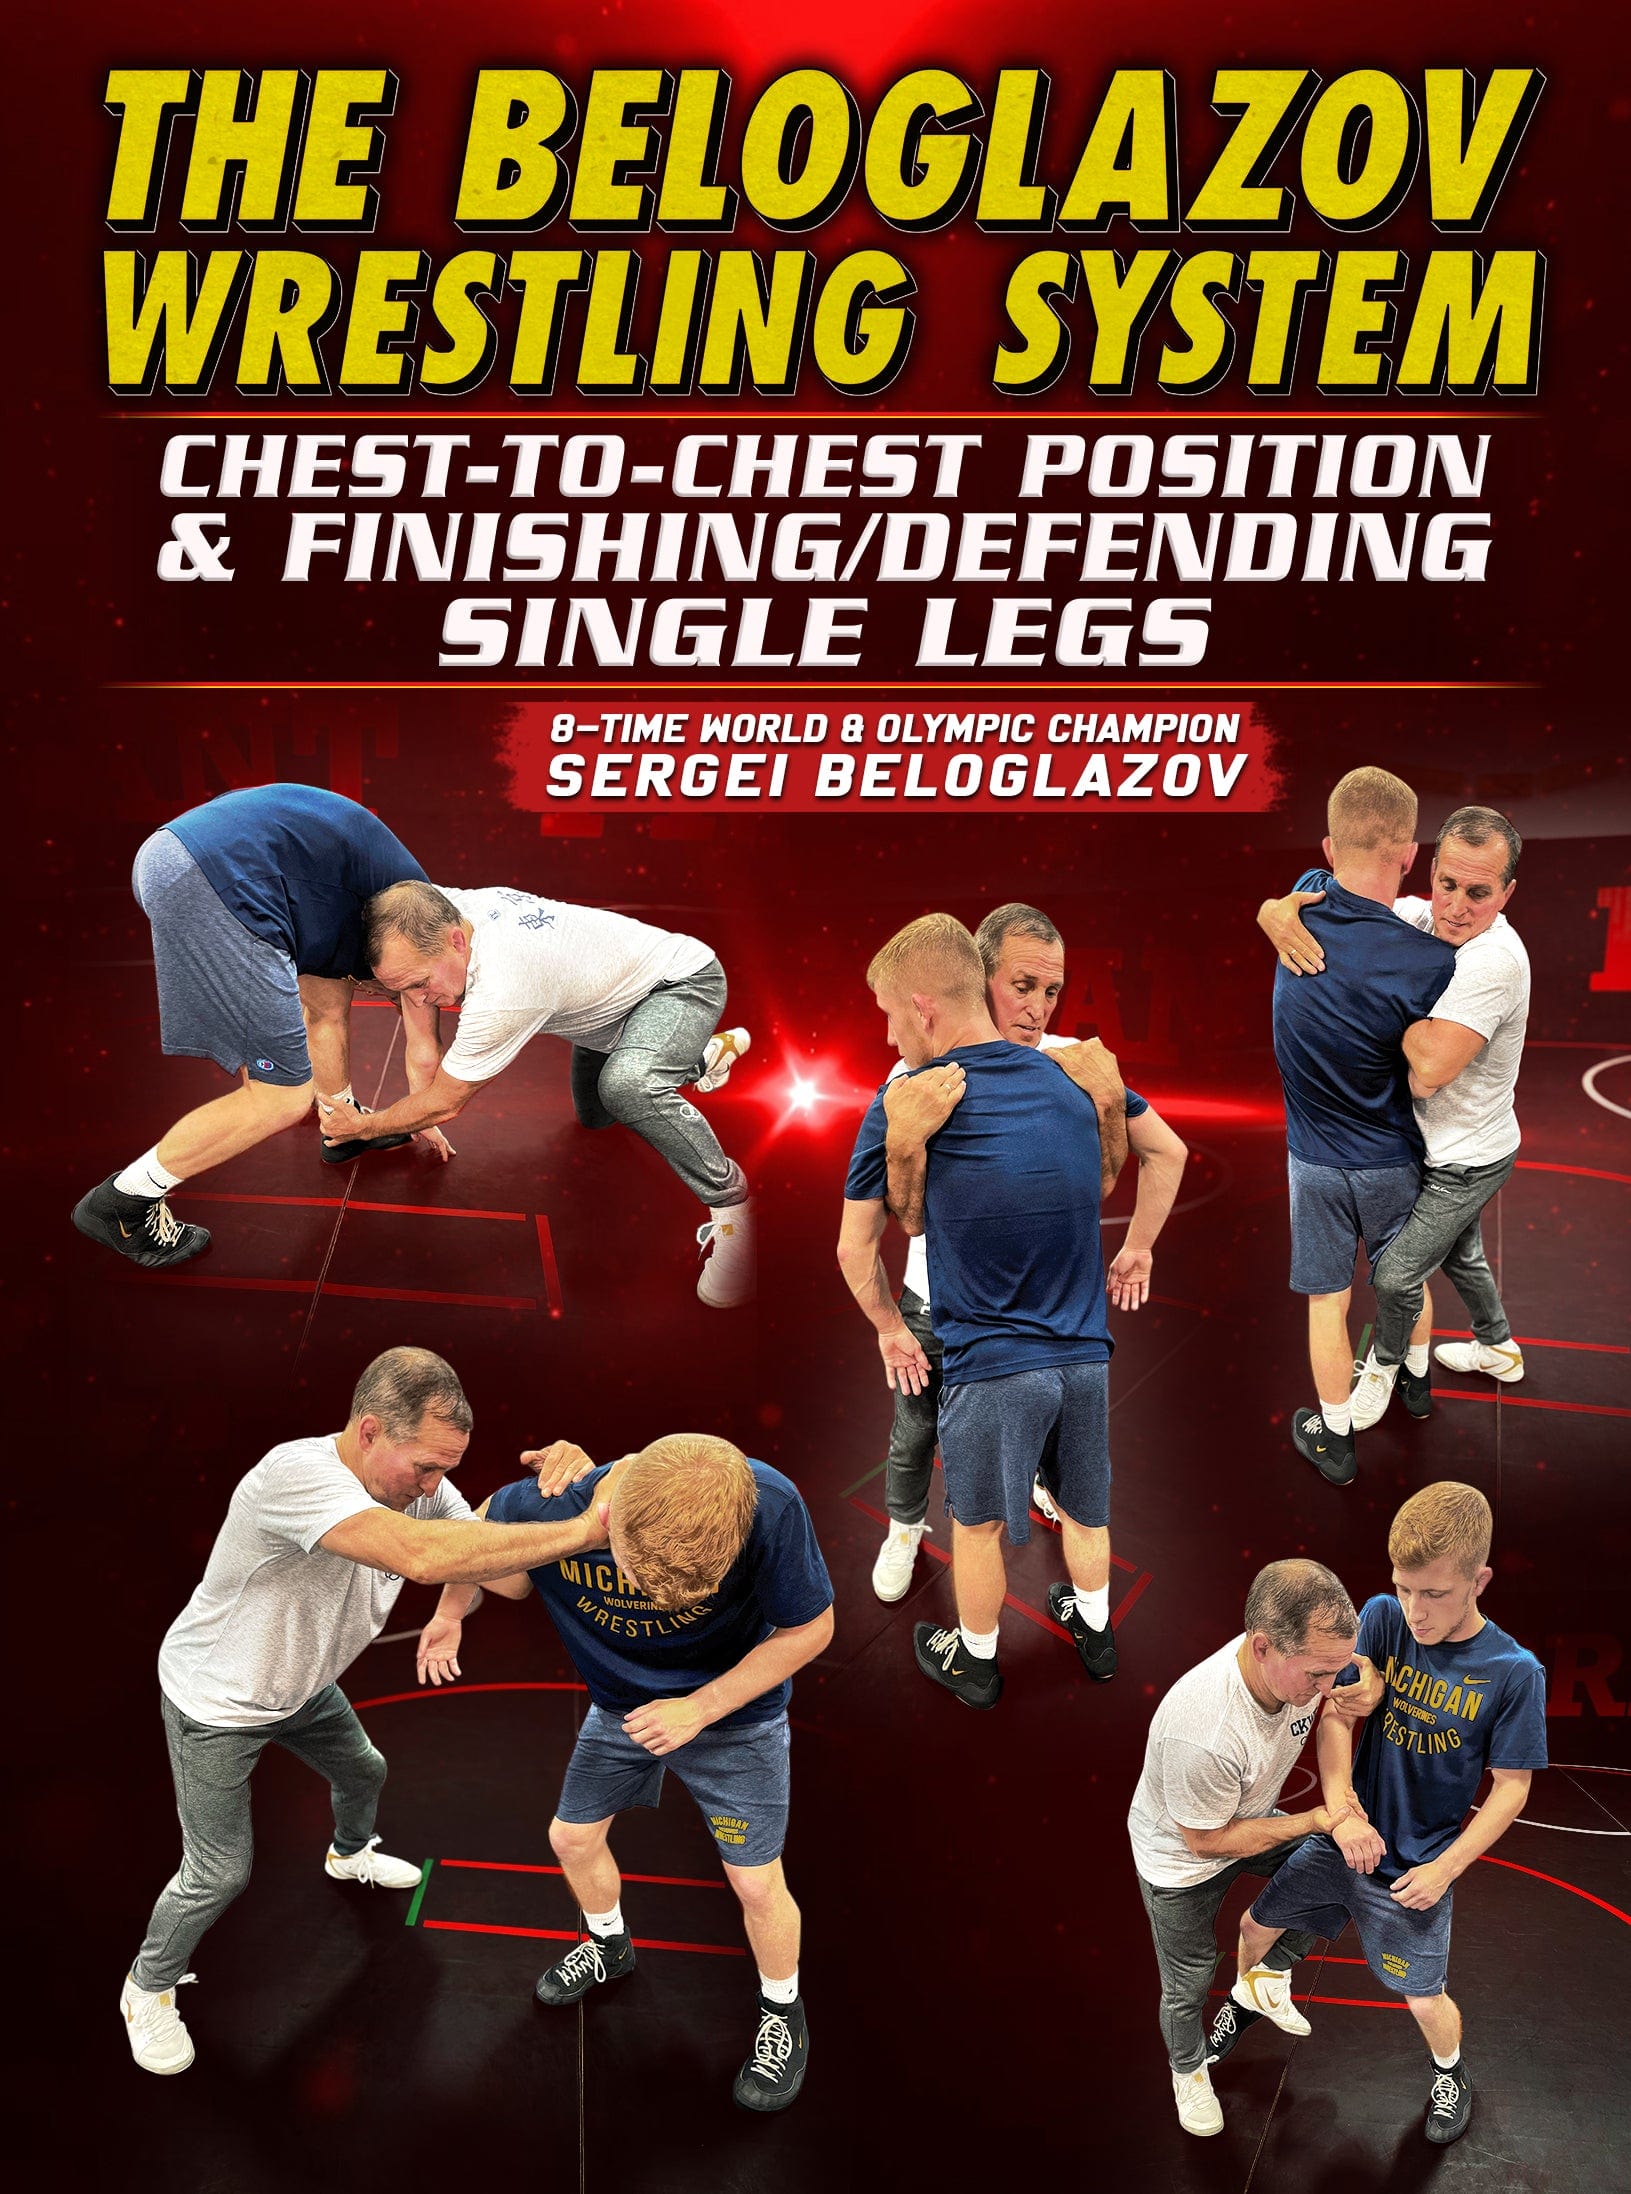 The Beloglazov Wrestling System: Chest to Chest Position & Finishing/Defending Single Legs by Sergei Beloglazov - Fanatic Wrestling